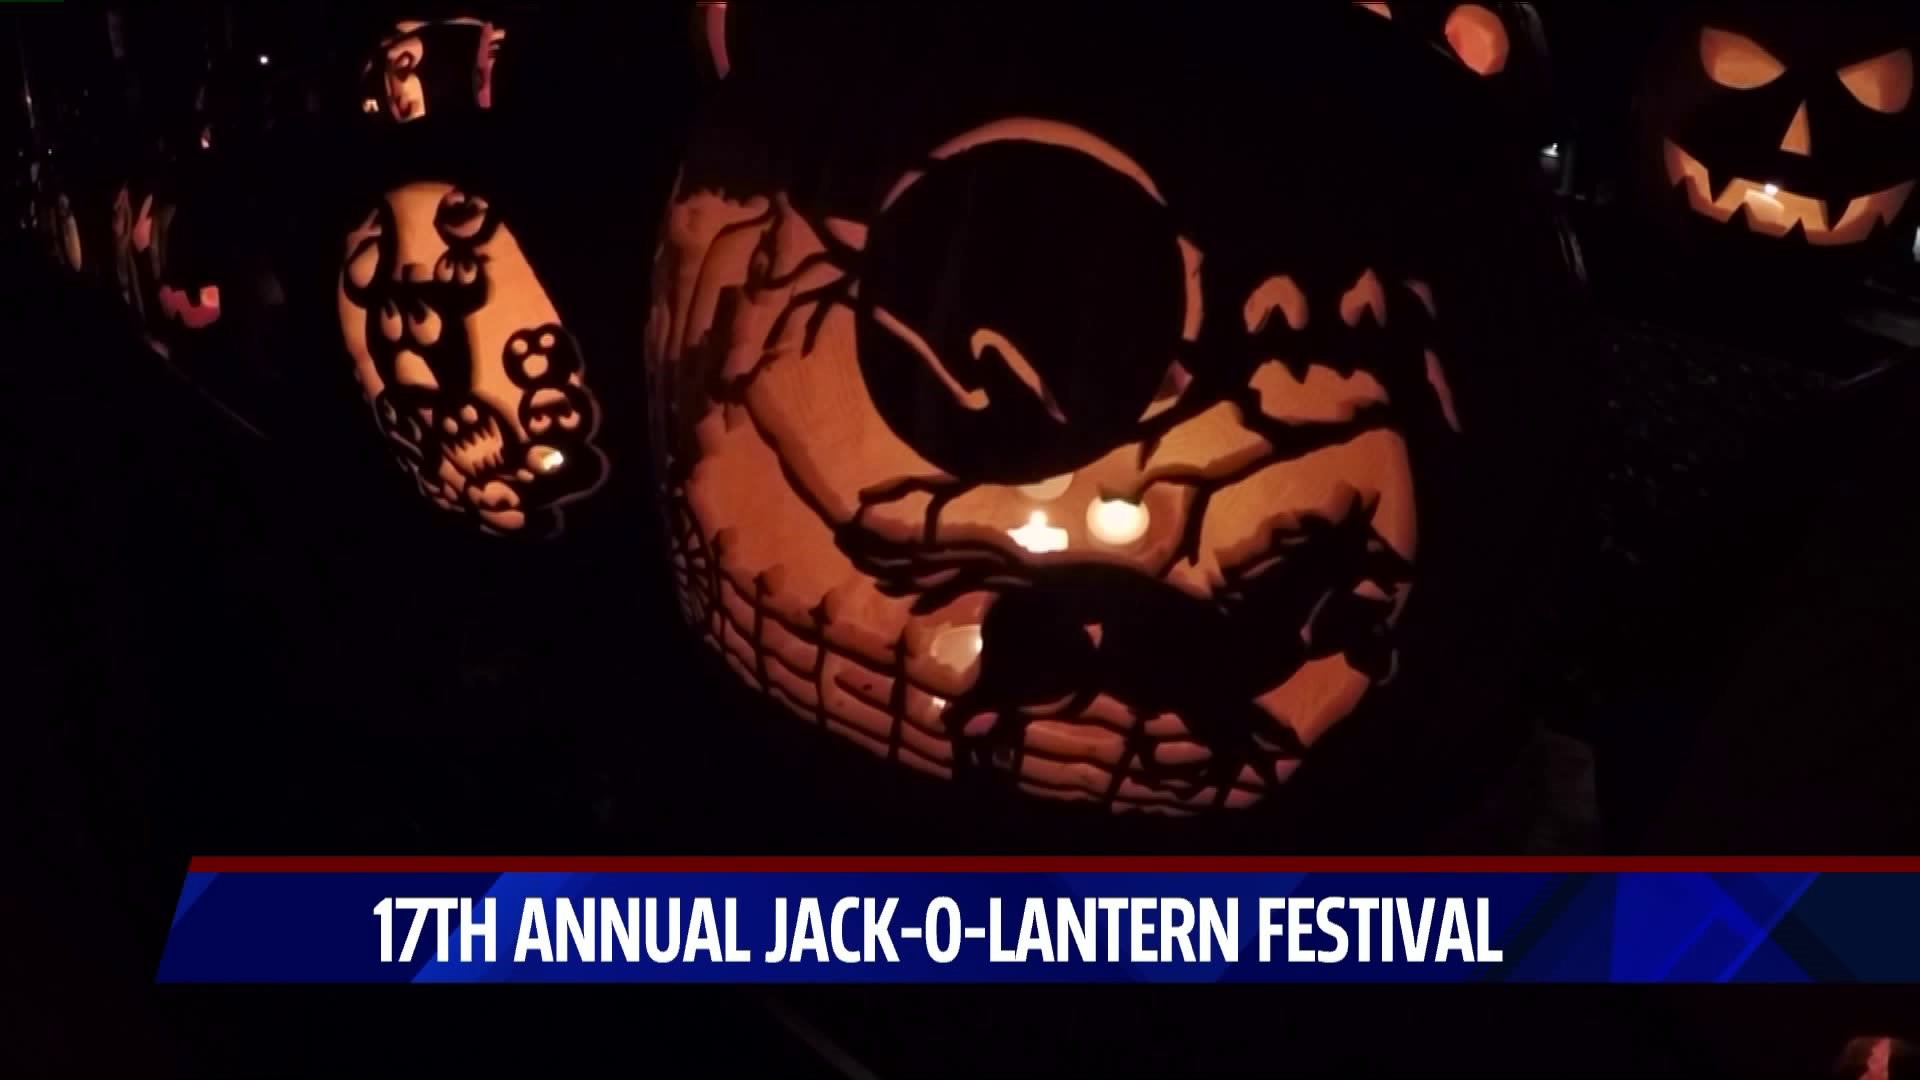 Enfield Jack-o-lantern festival